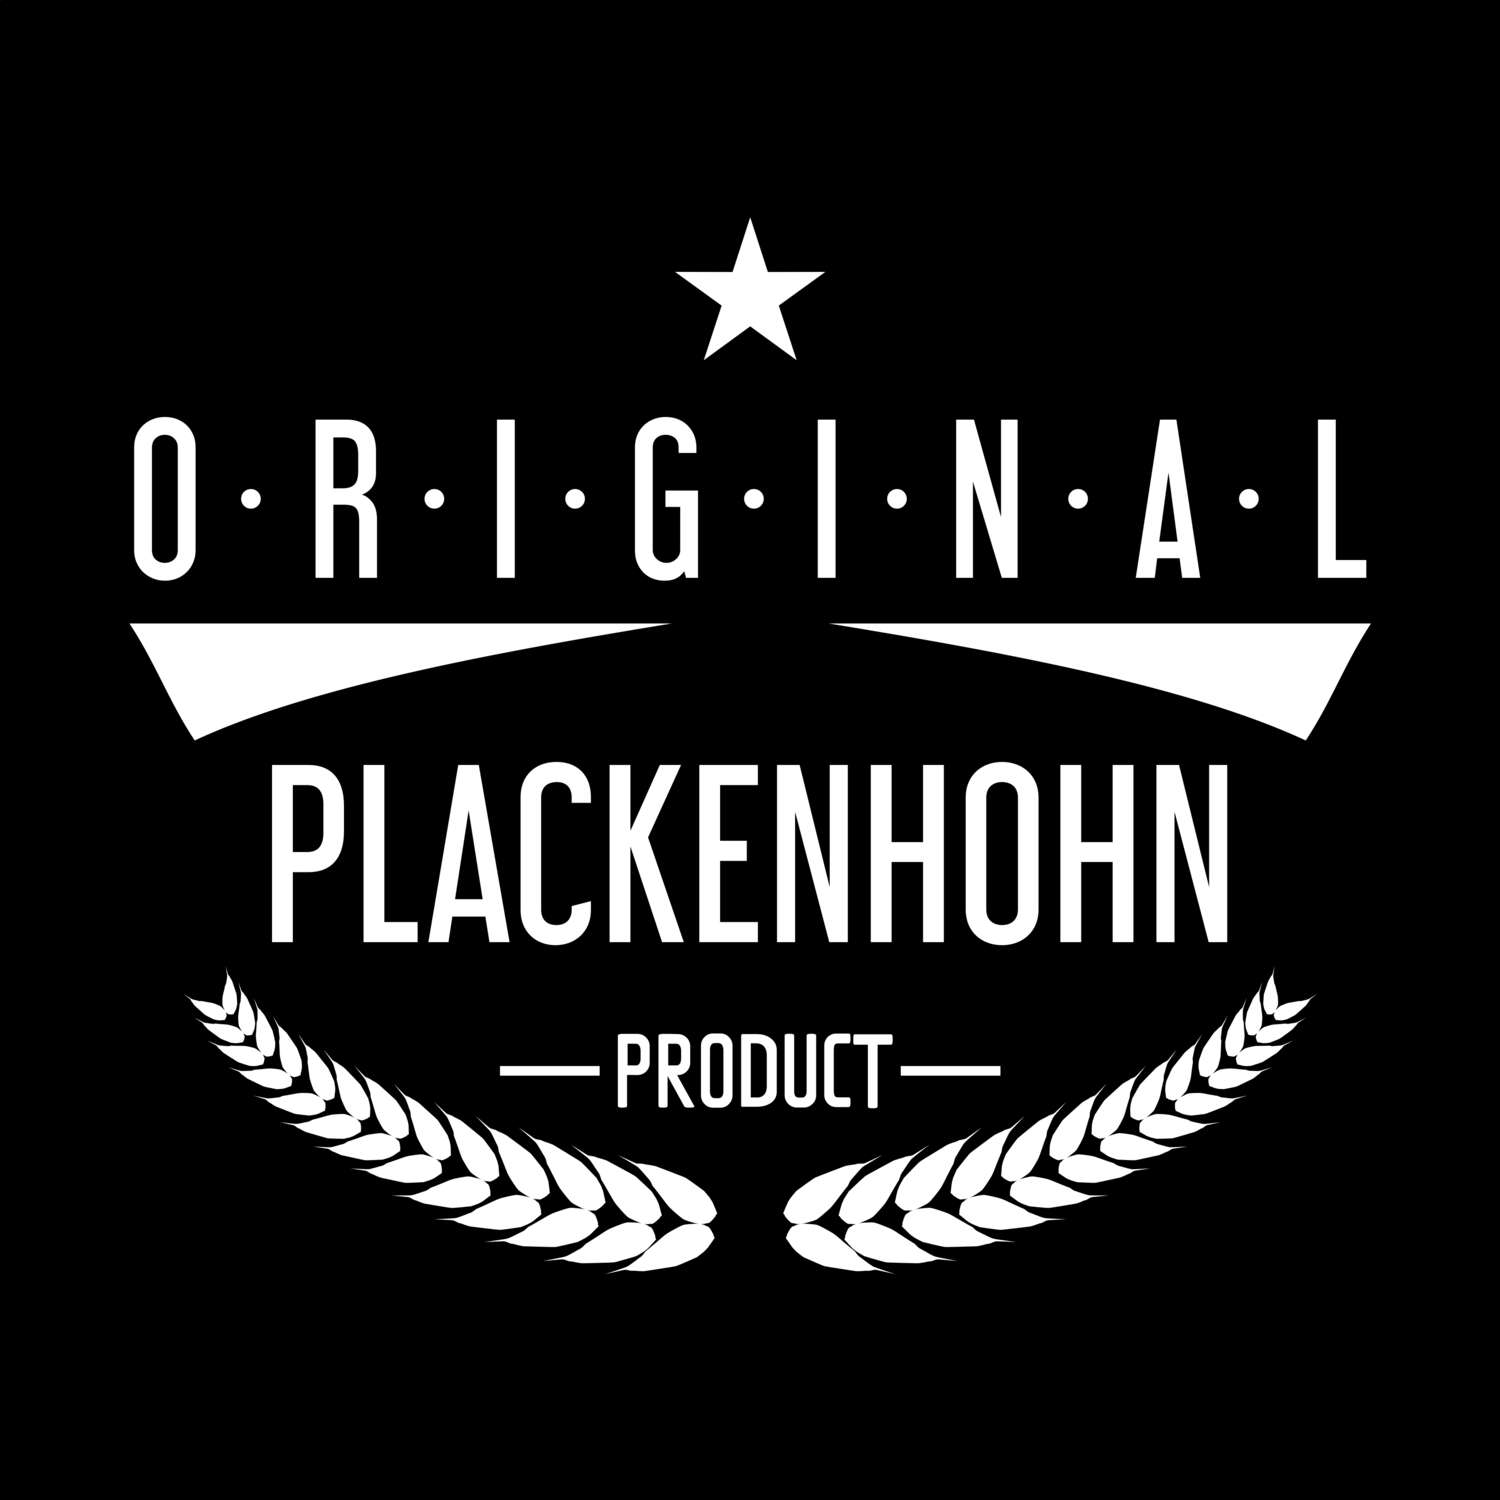 Plackenhohn T-Shirt »Original Product«